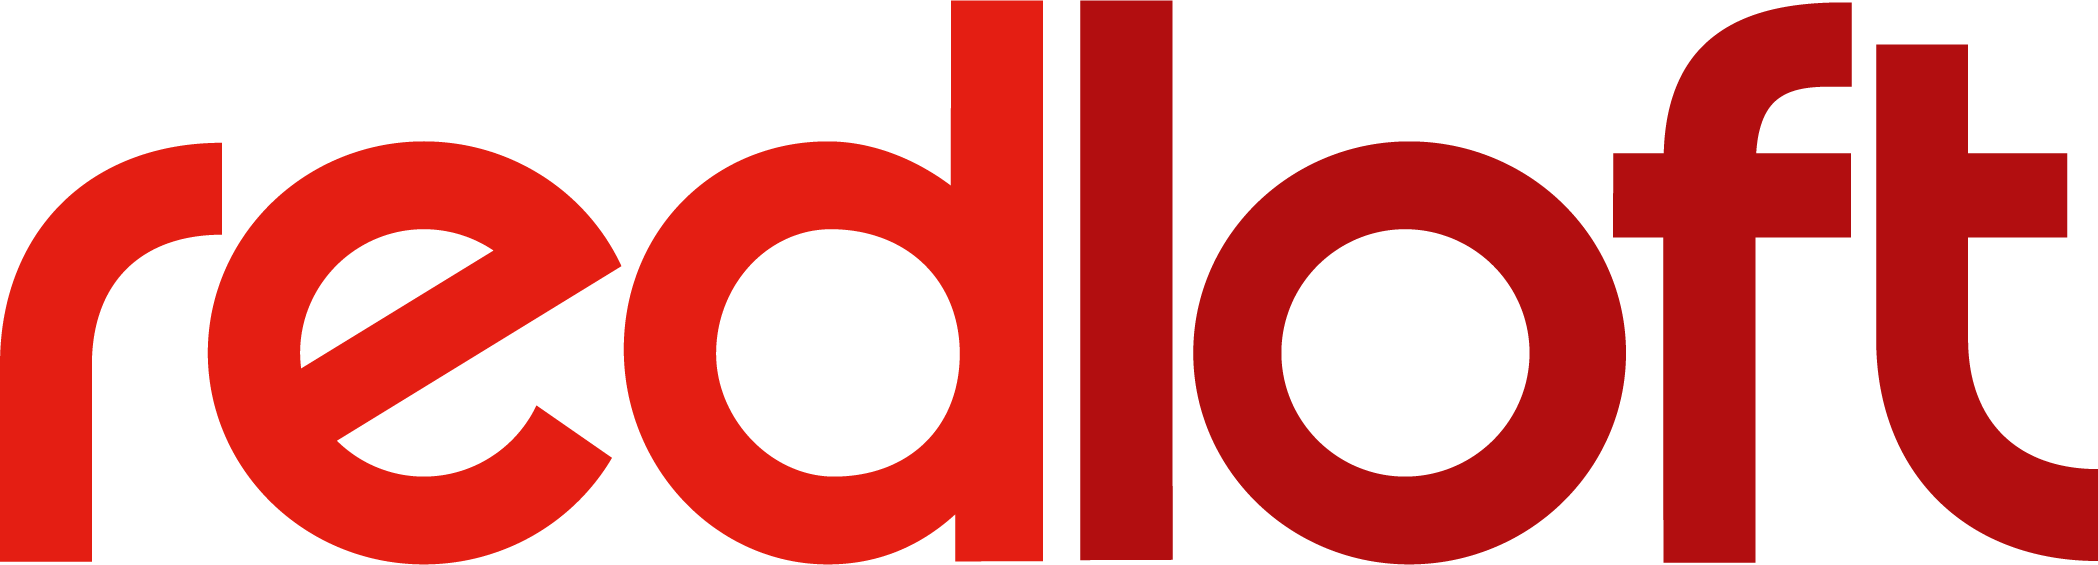 Redloft logo